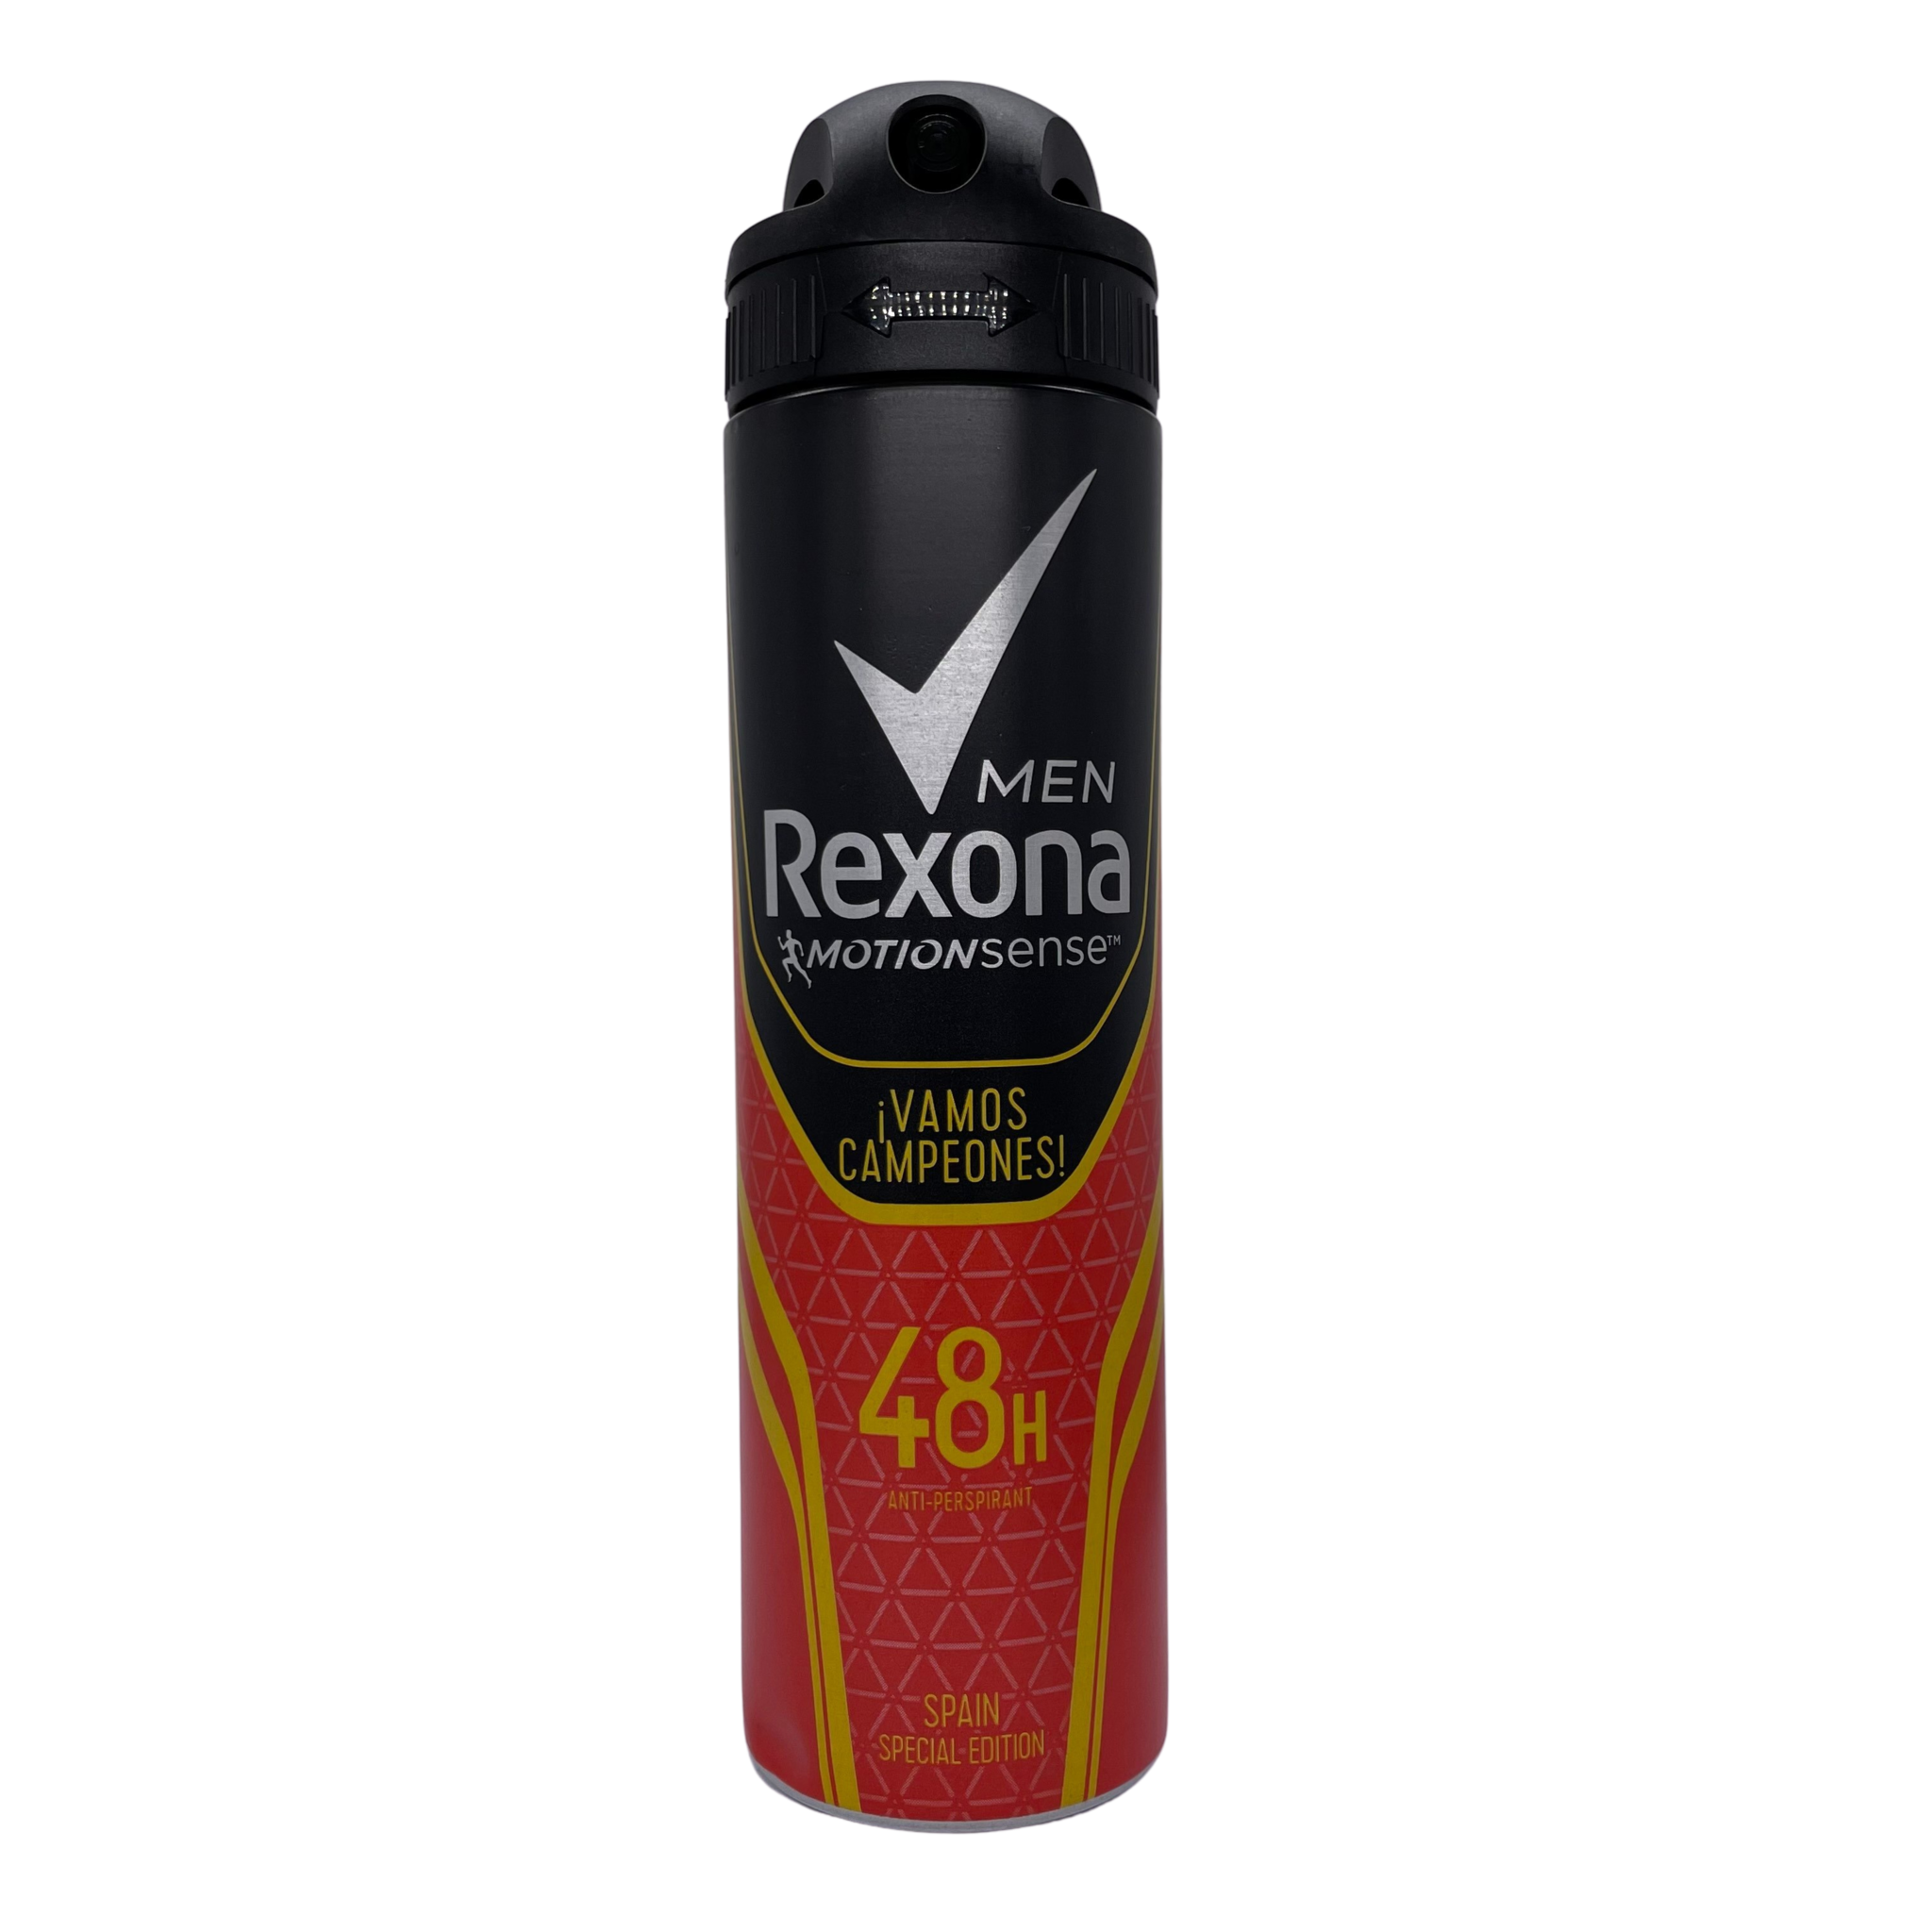 Rexona Men Vamos Campeones deodorant spray 150ml